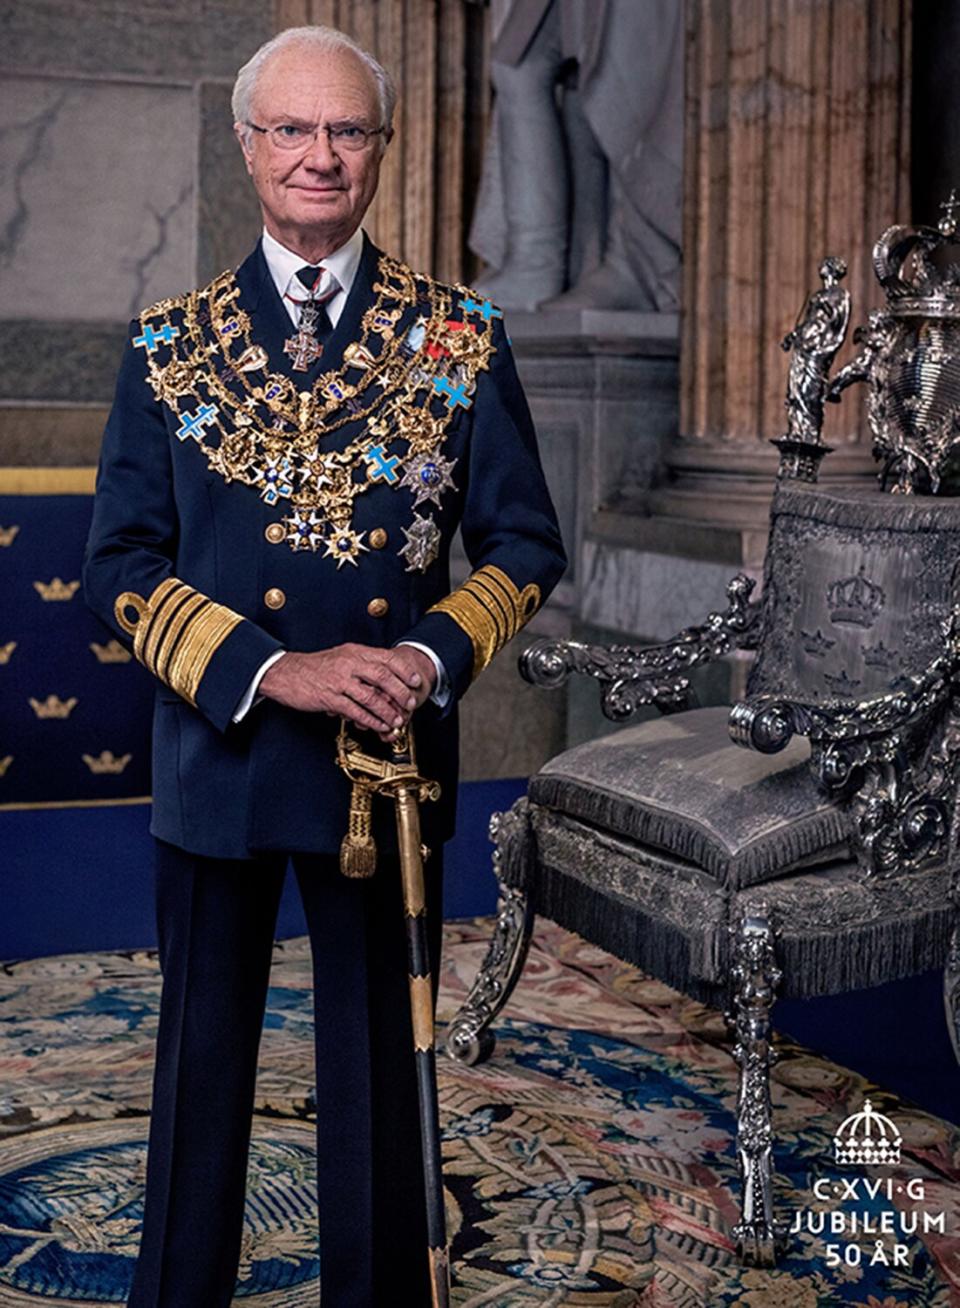 Sweden's King Carl XVI Gustaf